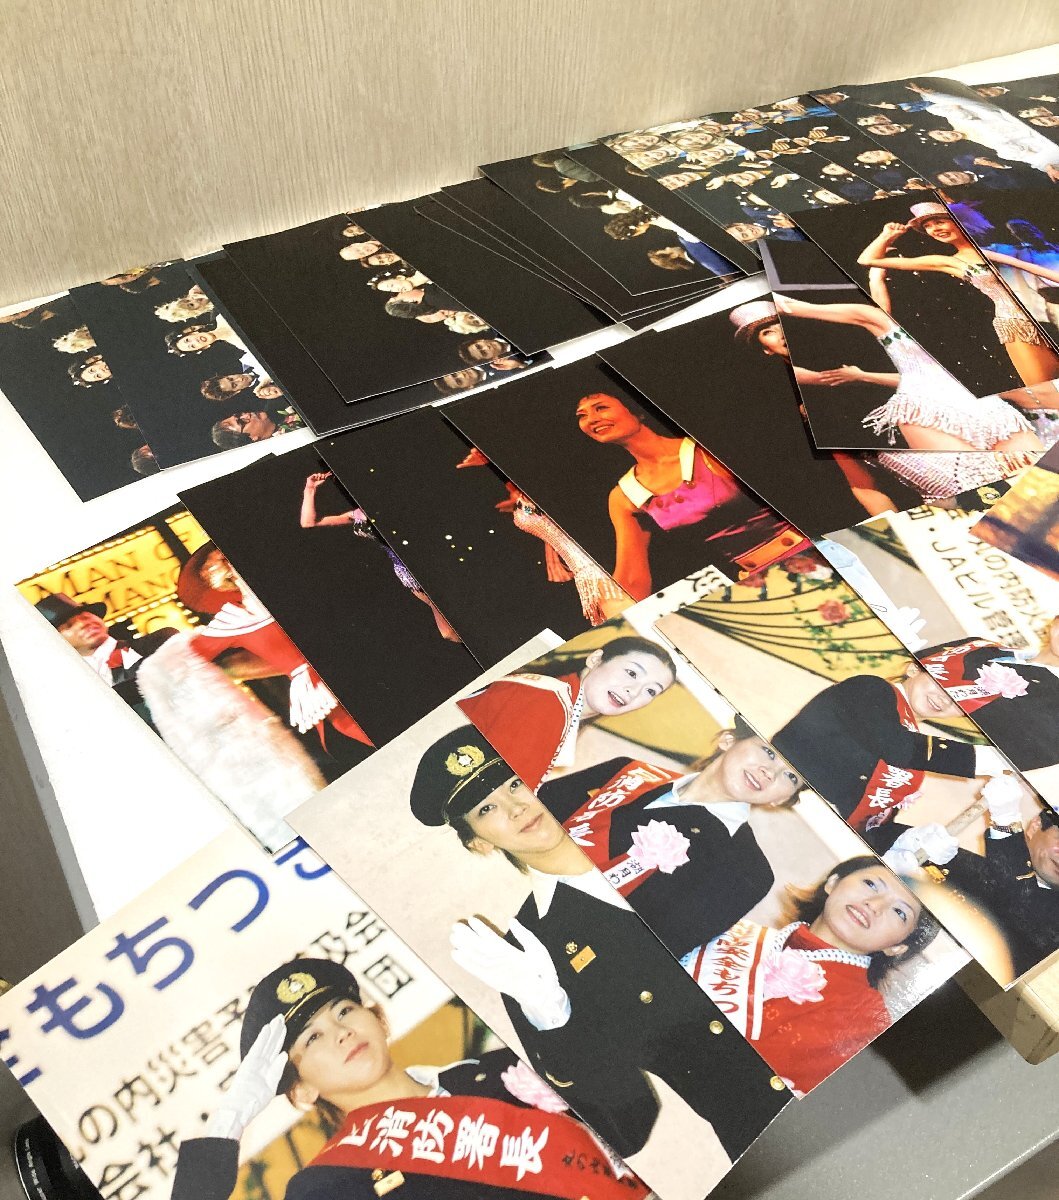 [76]① 1 jpy ~ Takarazuka Takarazuka .... life photograph Mai pcs TAKARAZUKA. summarize price. understand person worth seeing Takarazuka goods 